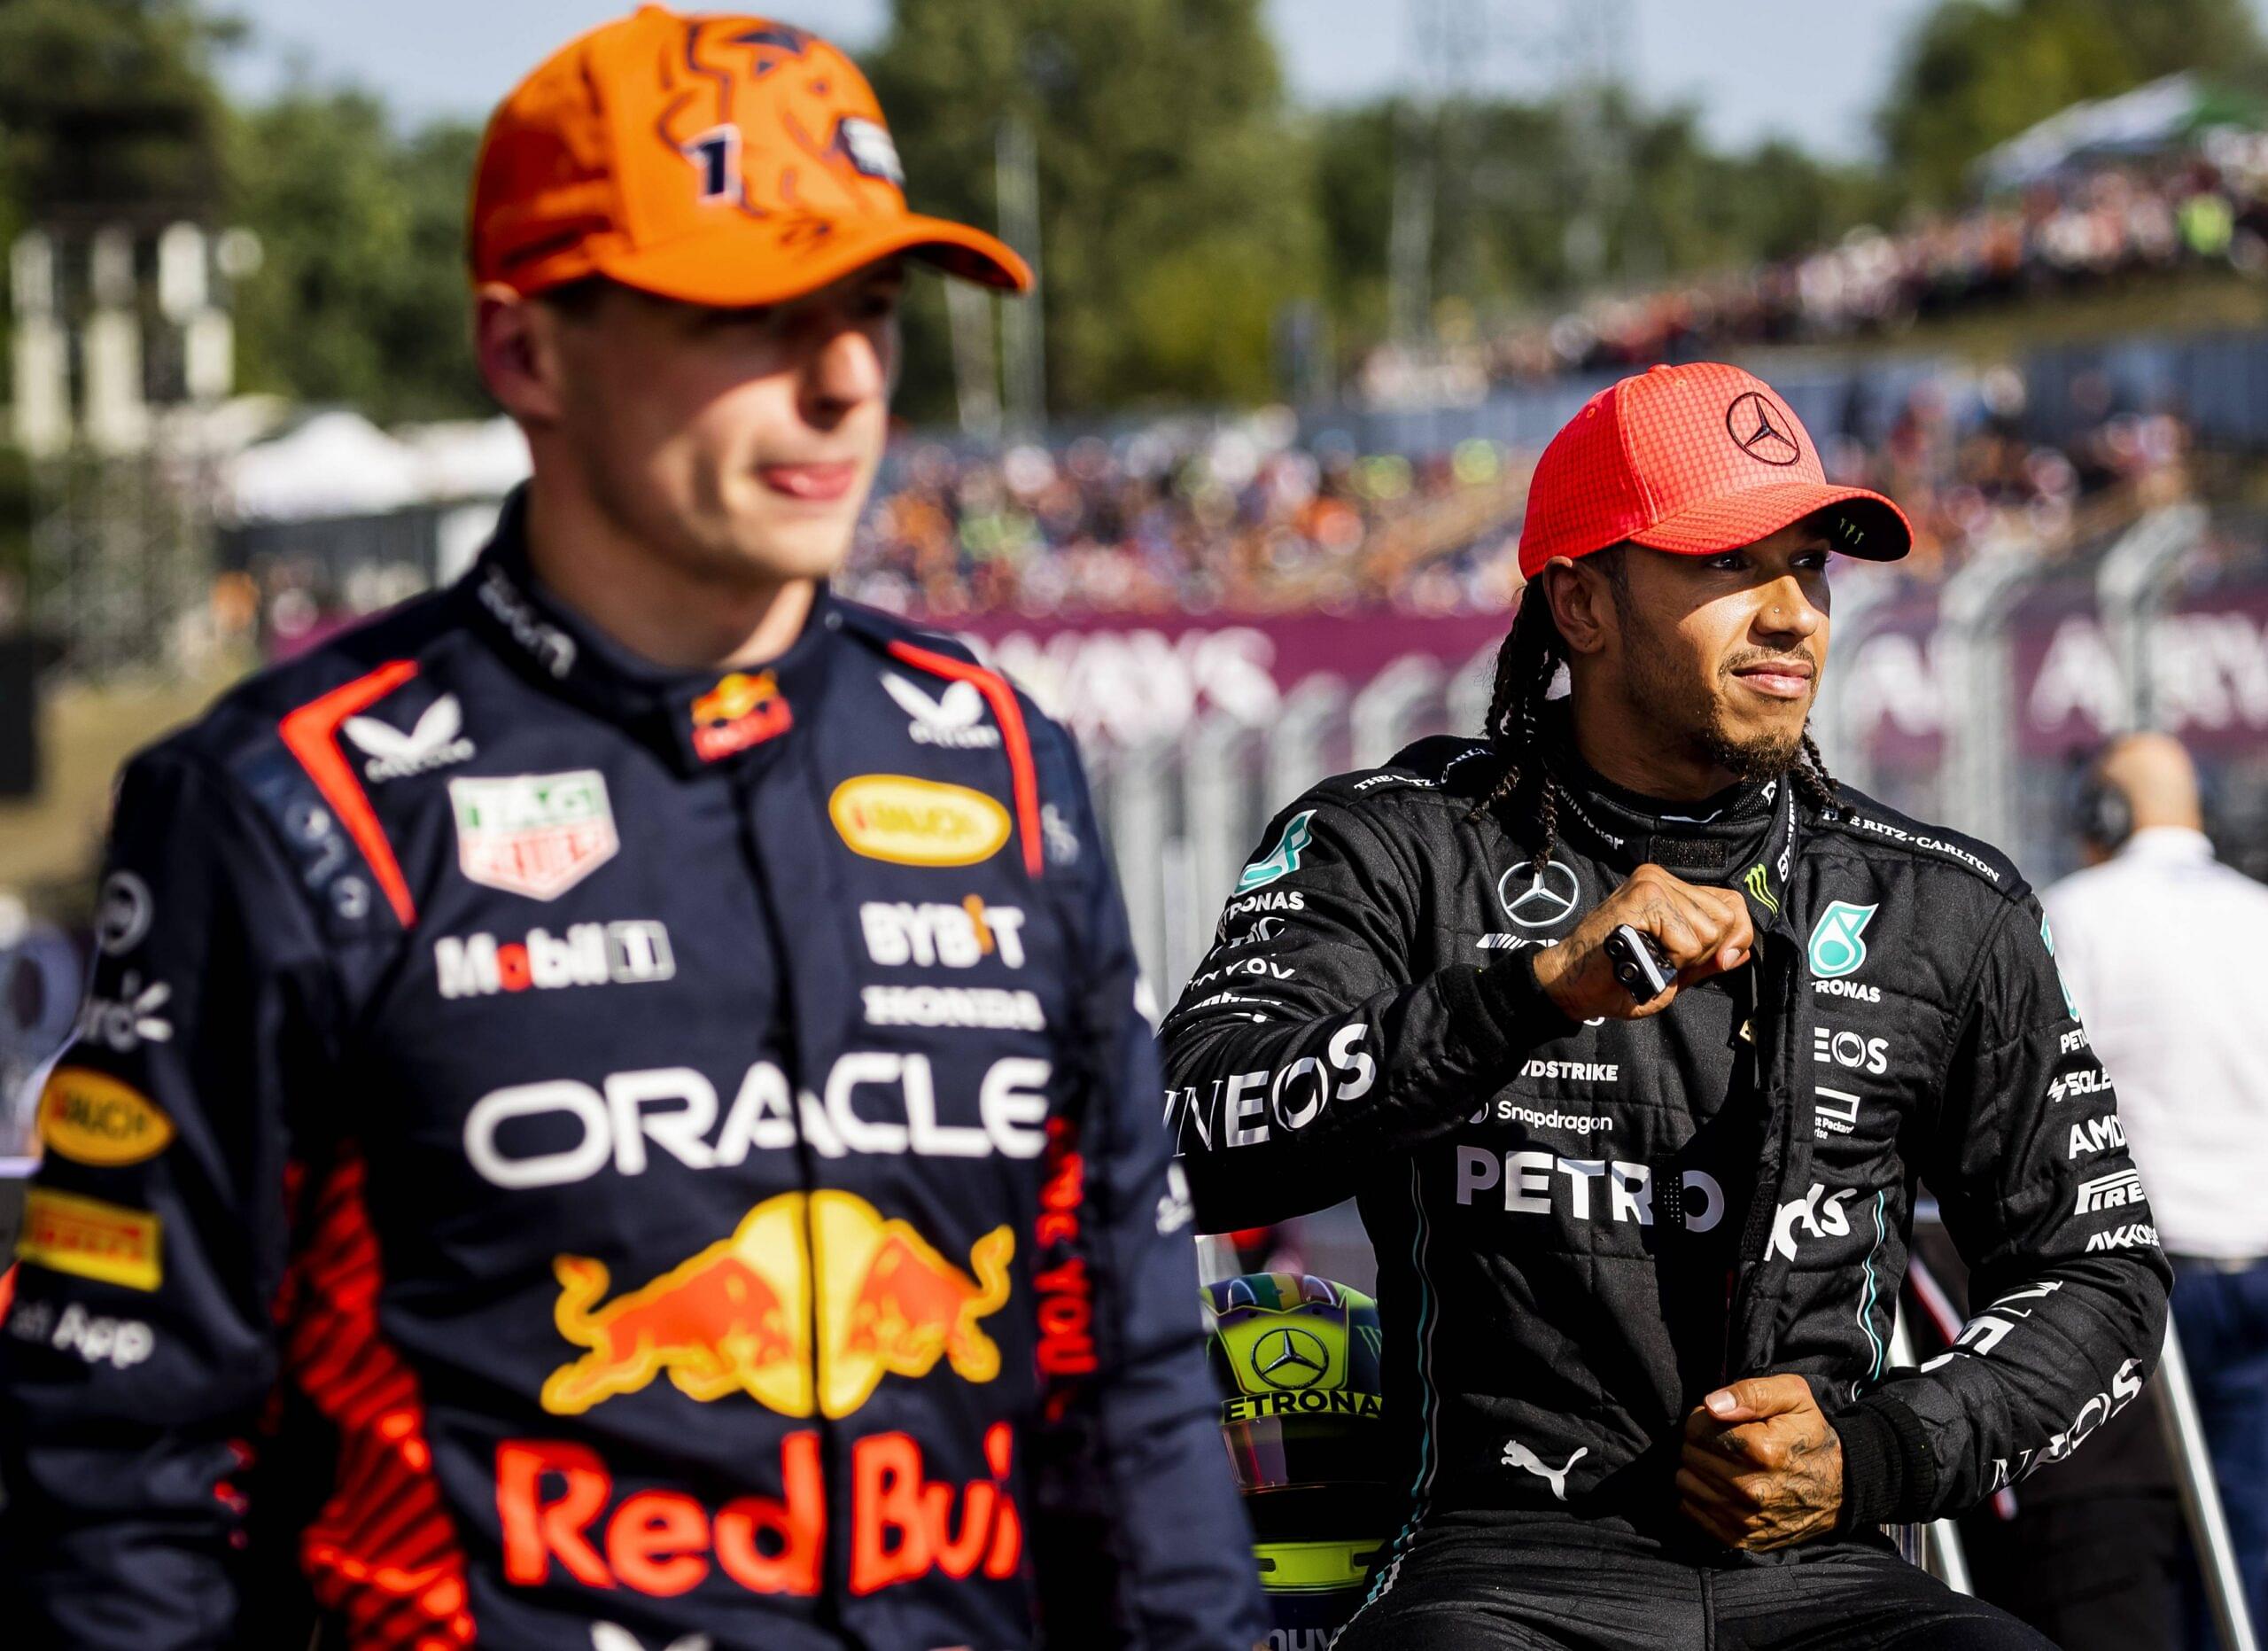 Lewis Hamilton Makes Max Verstappen Eat Humble Pie After Rash Criticism: “That’s a Good Thing”